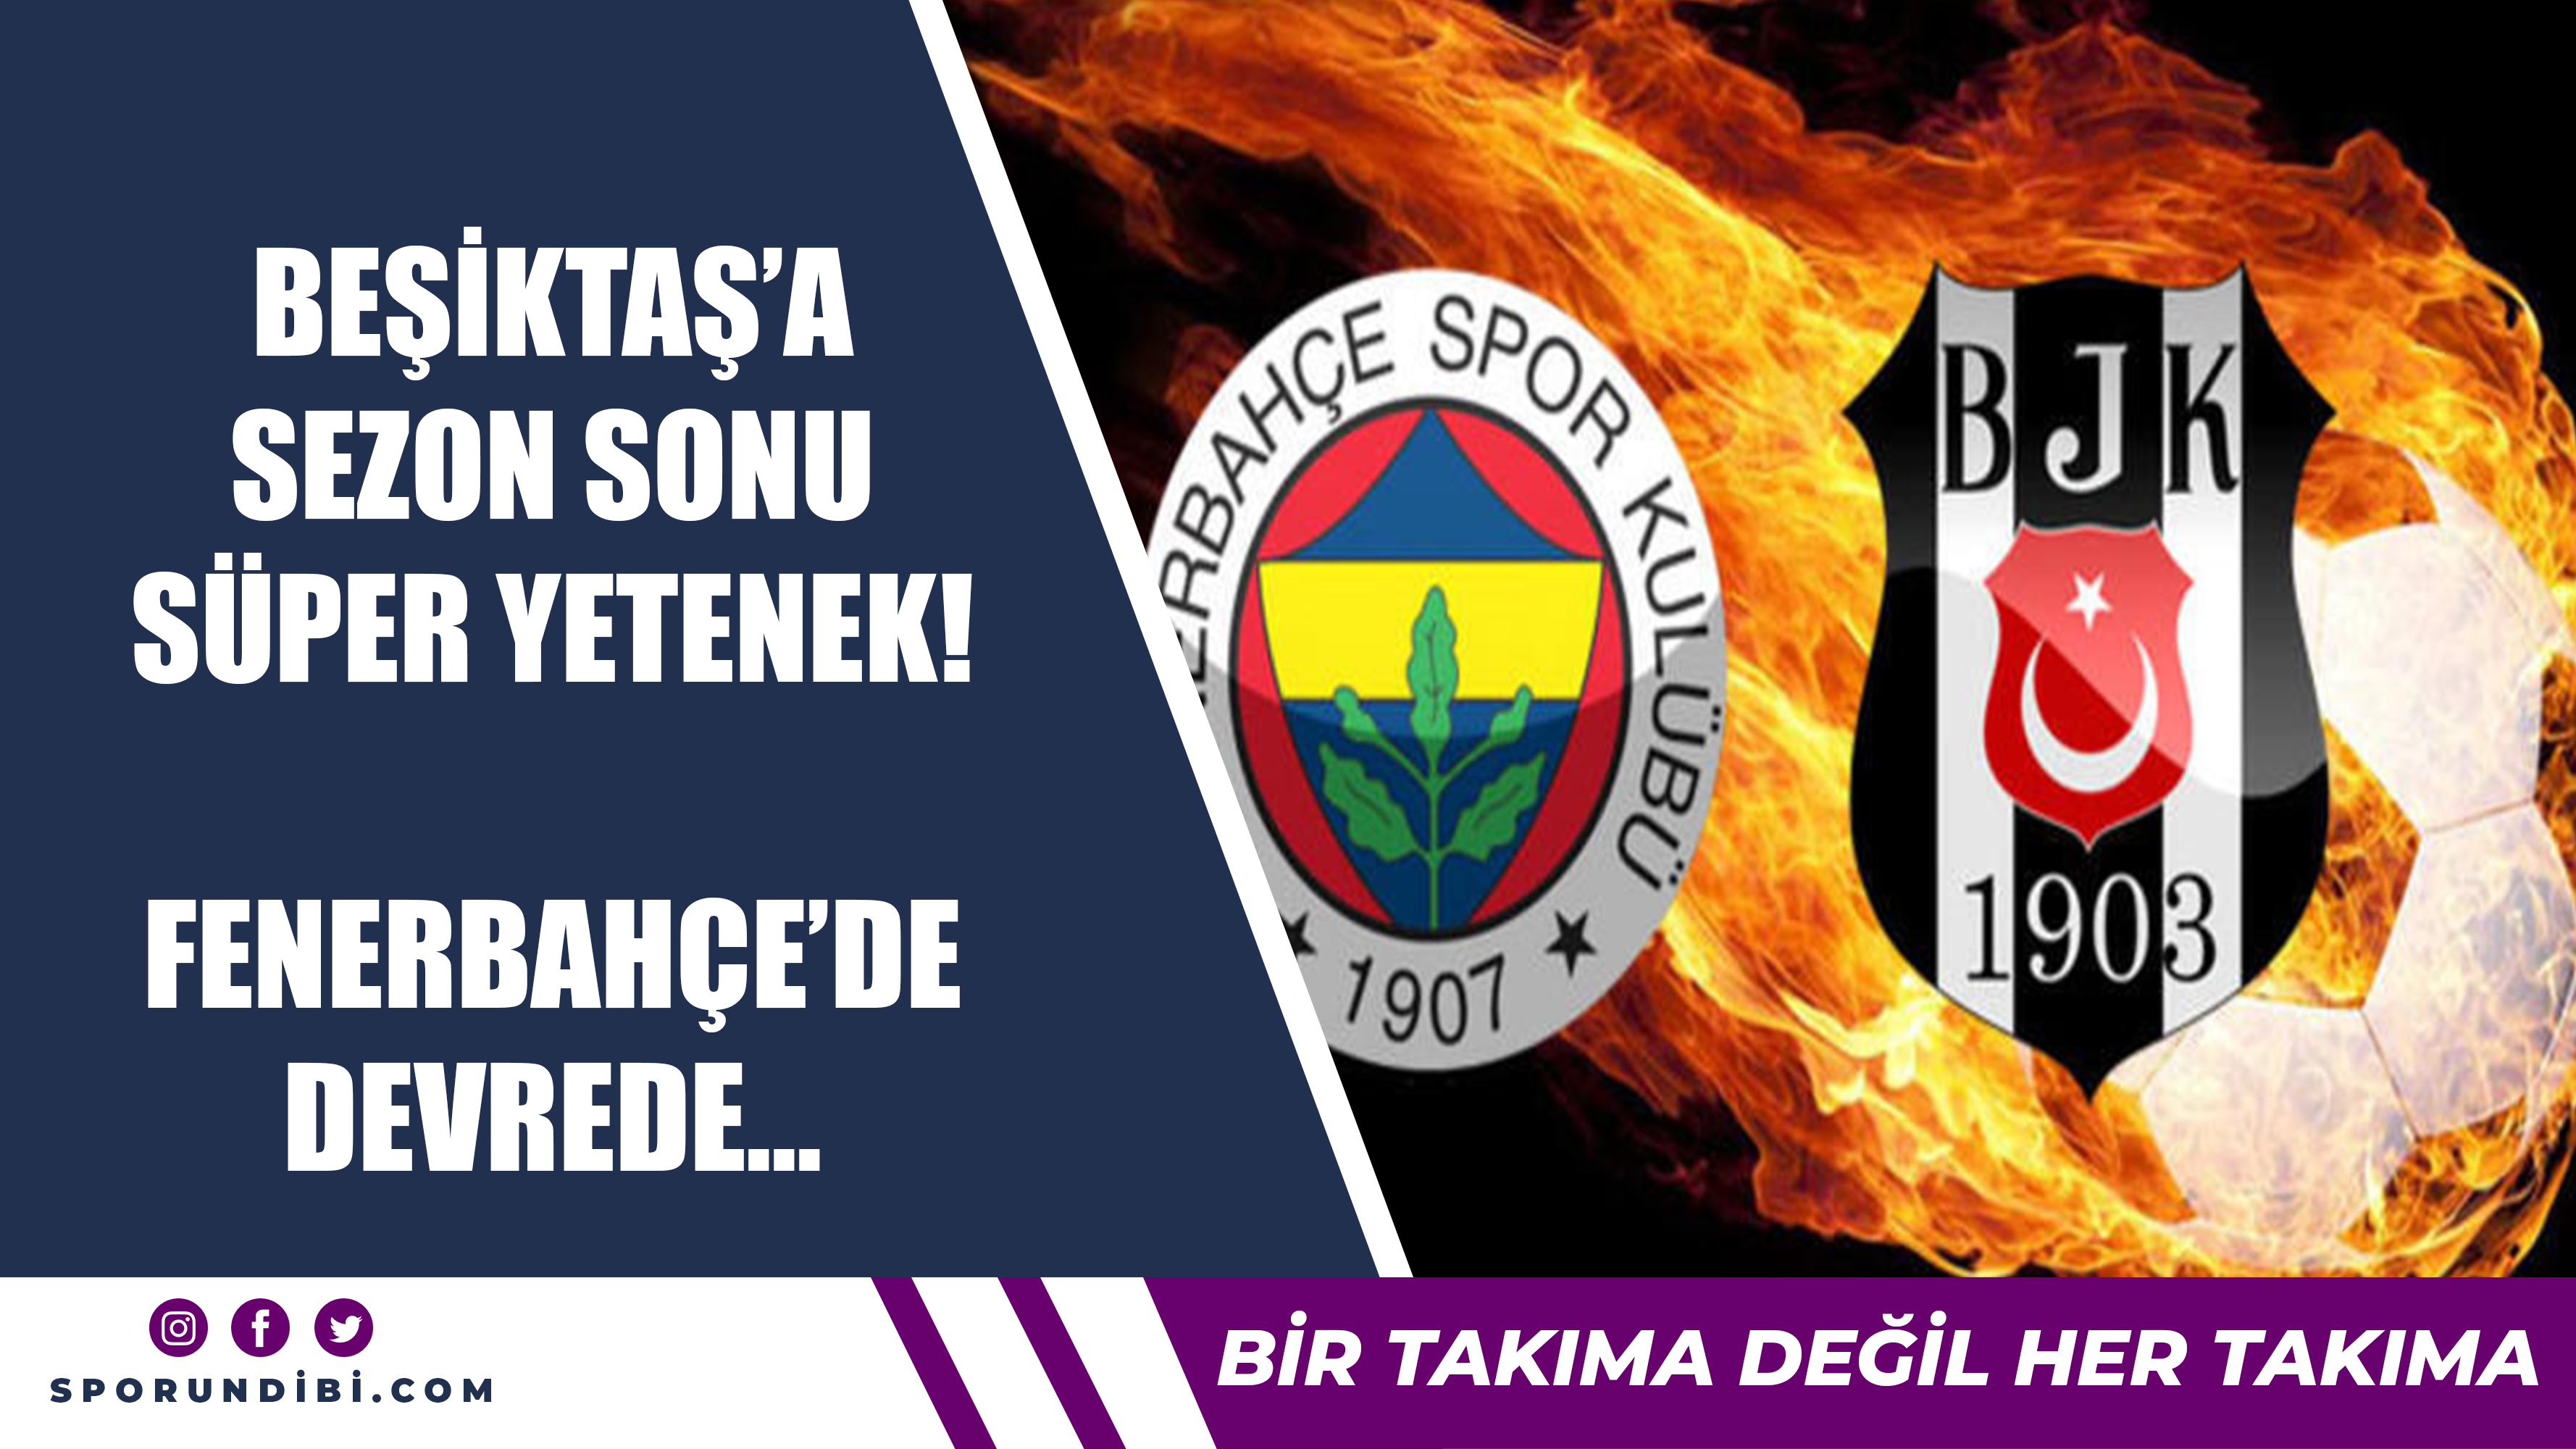 Beşiktaş'a sezon sonu süper yetenek! Fenerbahçe'de devrede...